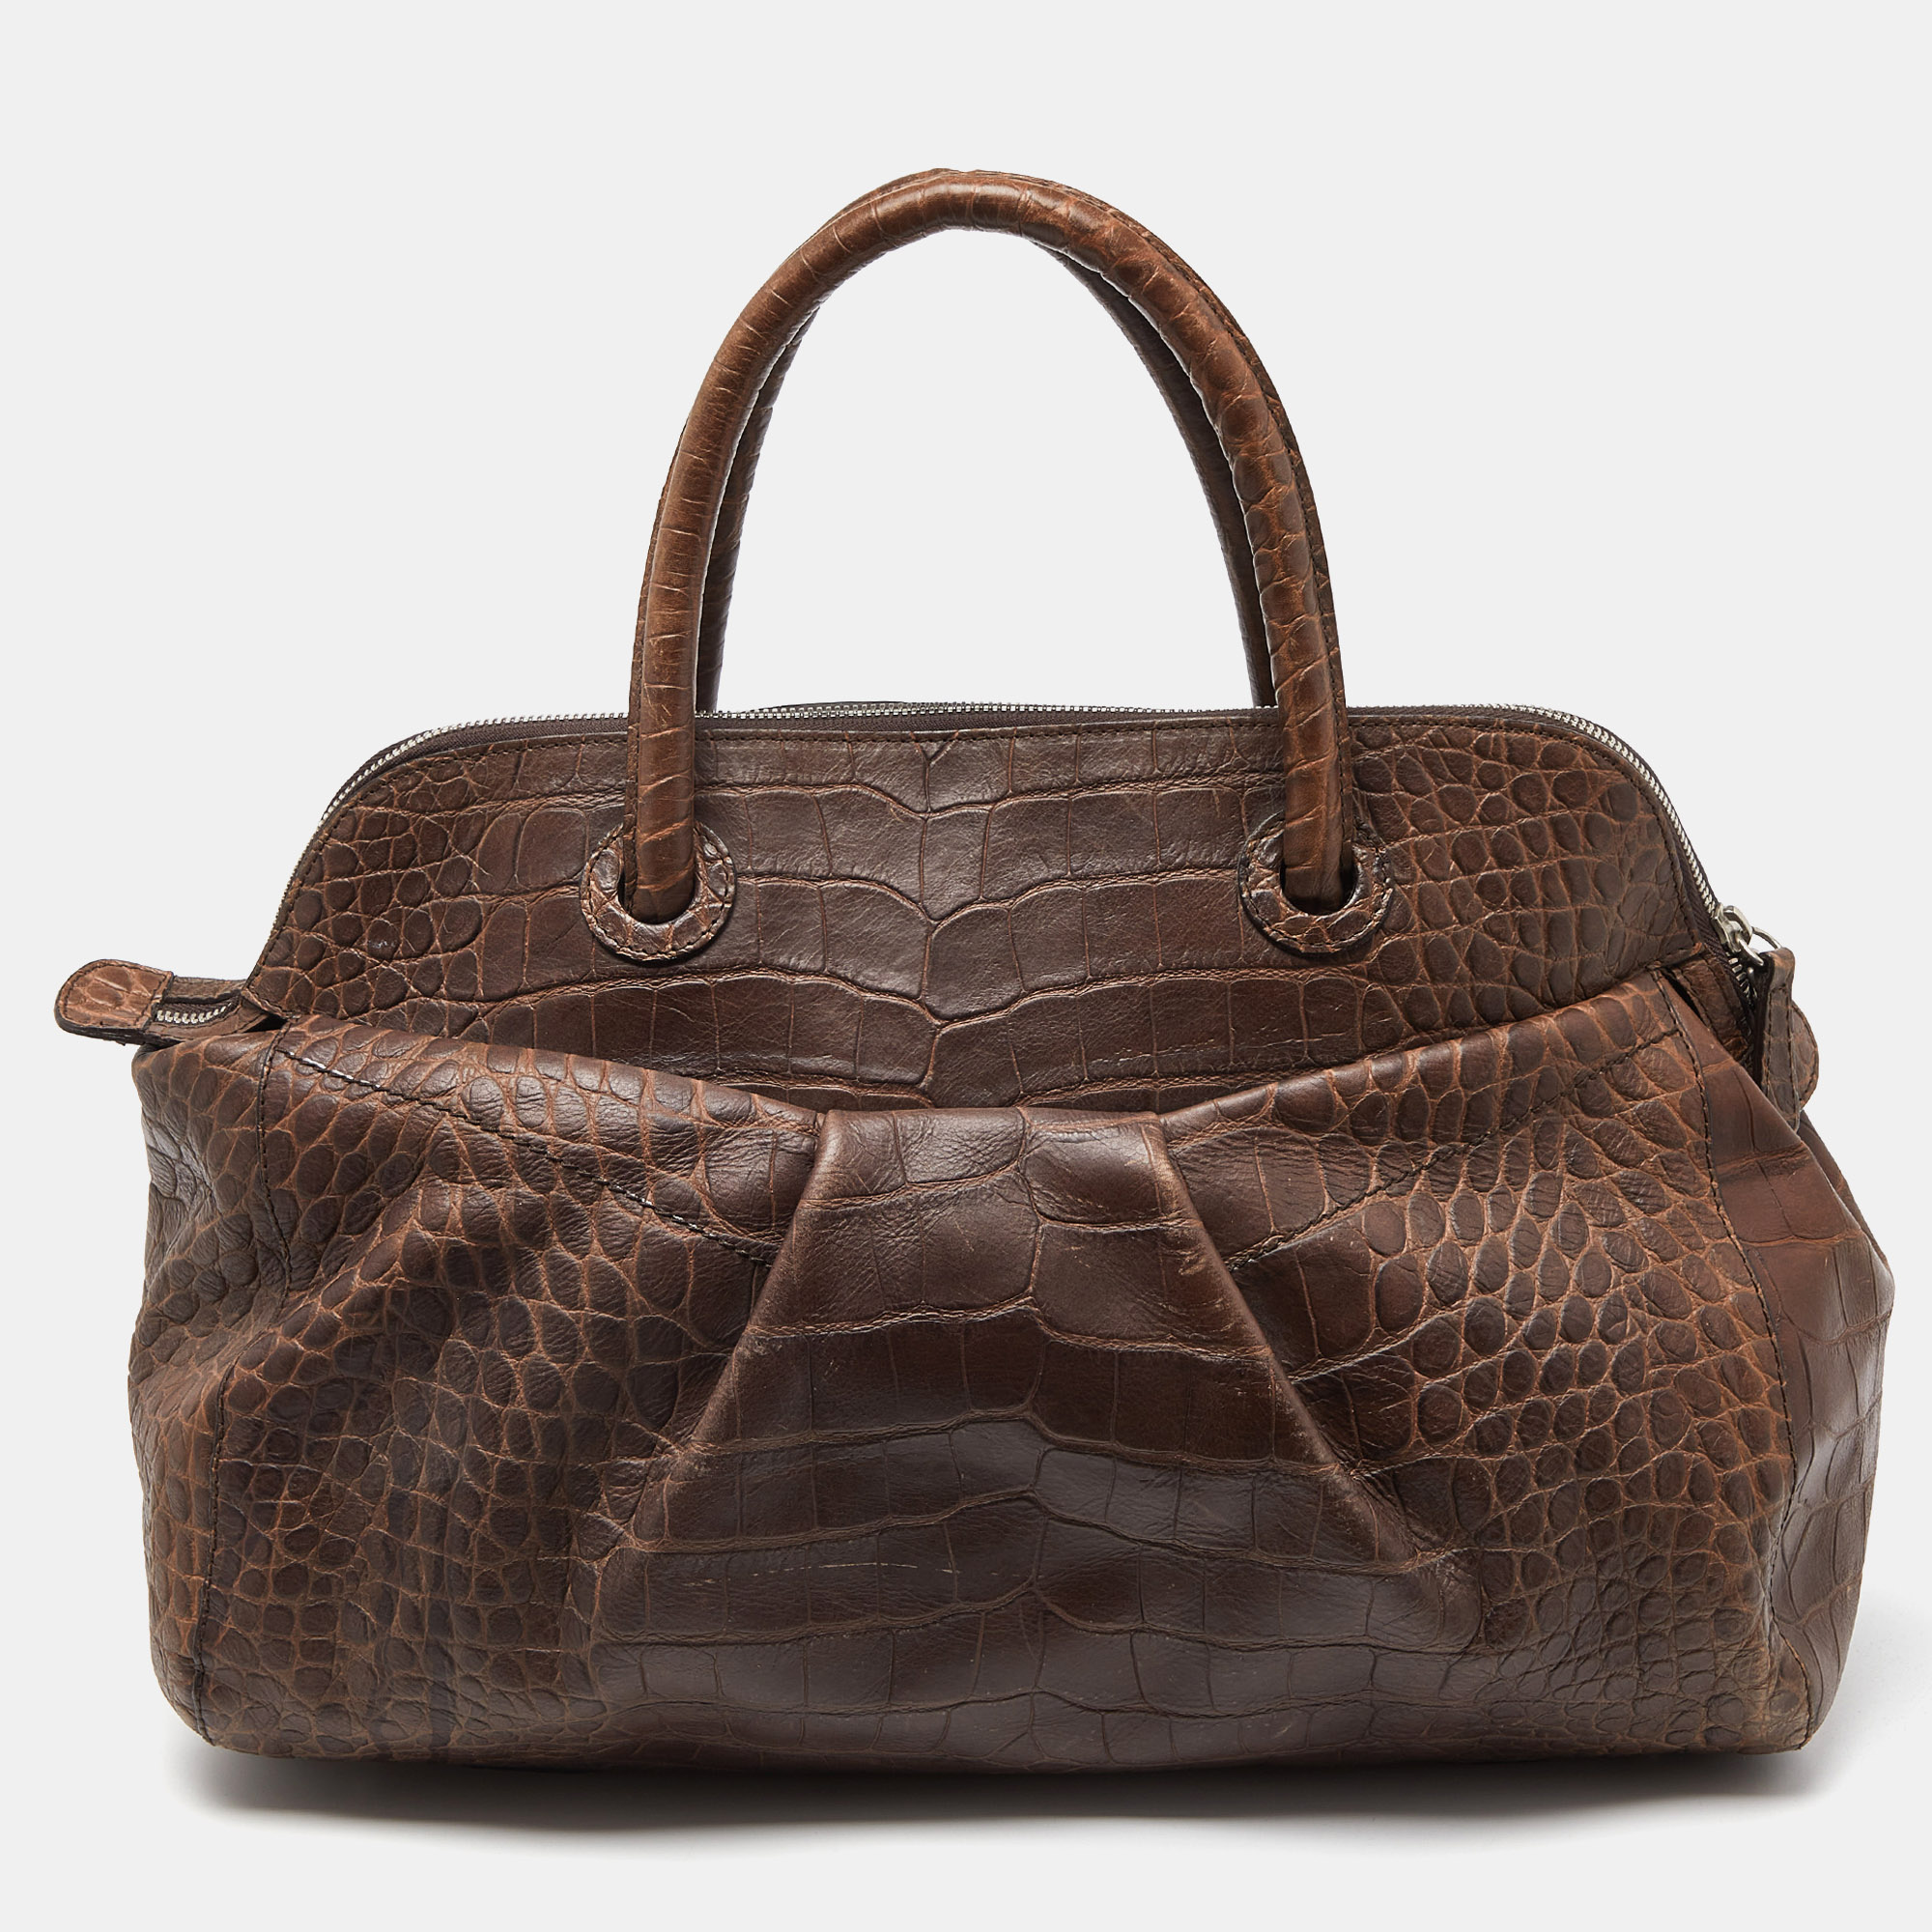 Furla brown croc embossed leather satchel